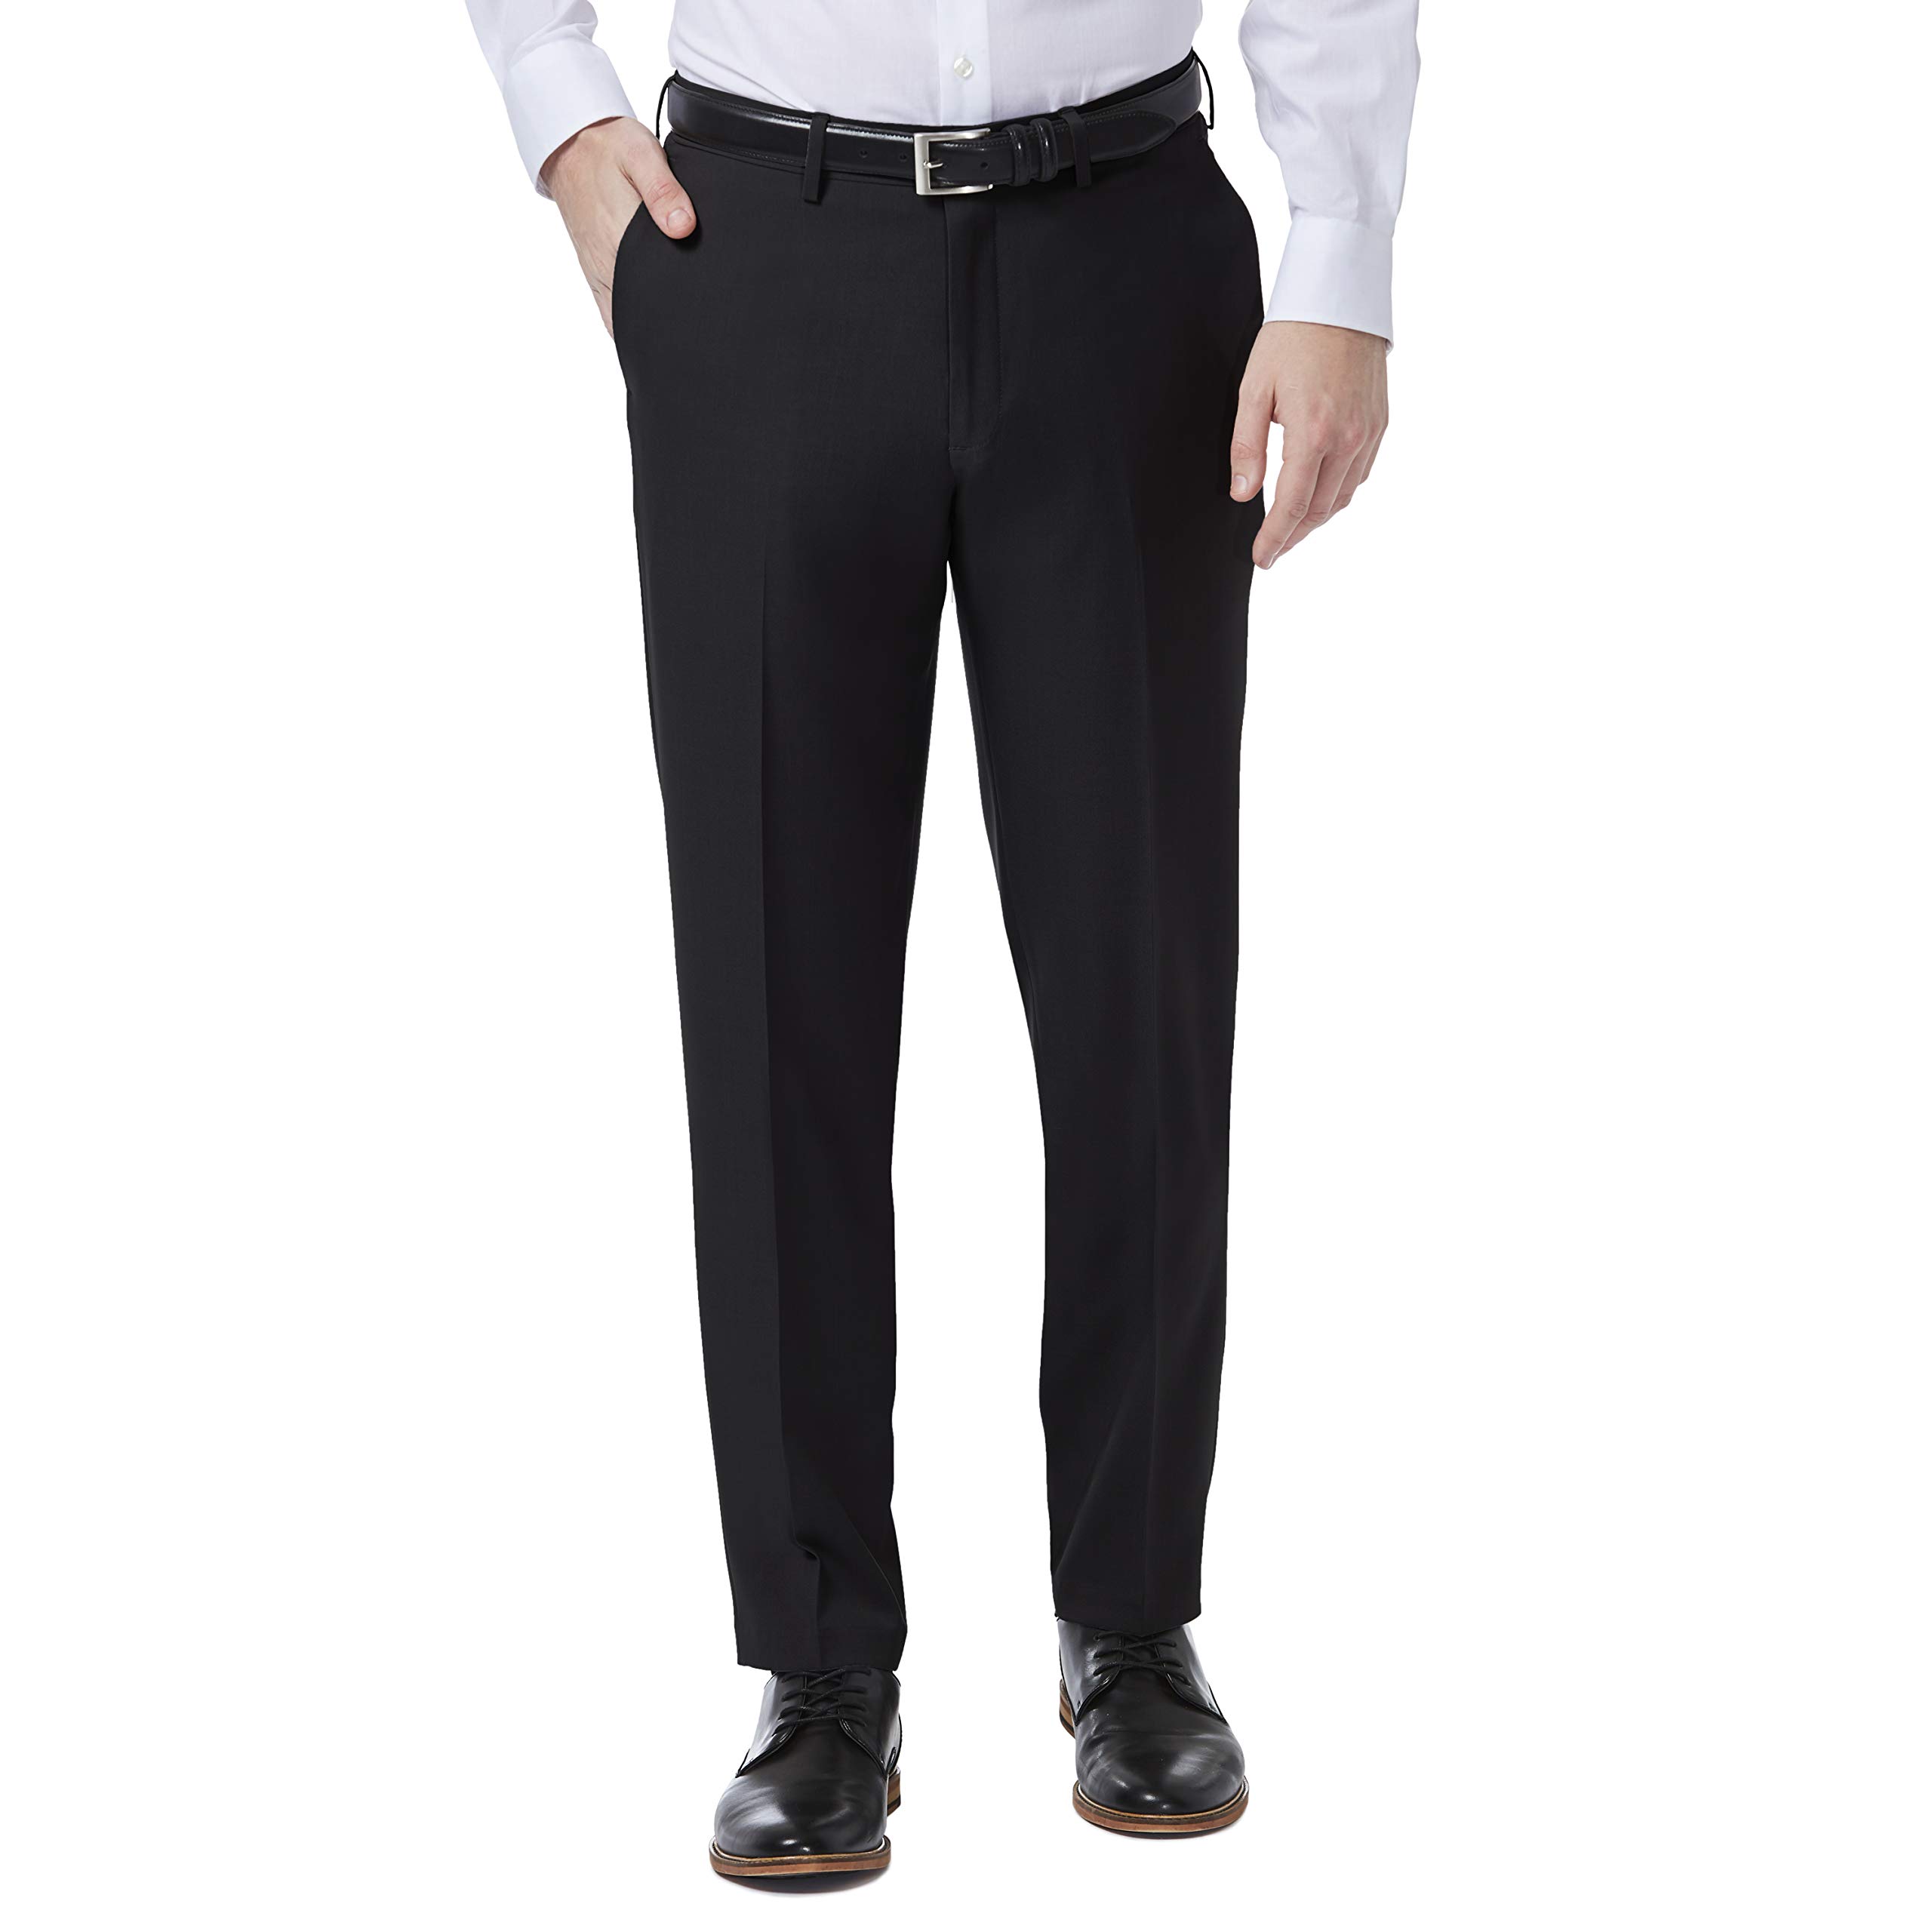 Haggar Men's Premium Comfort Dress Slim Fit Flat Front Pant (Black) $24.49 + Free Shipping w/ Prime or on $35+